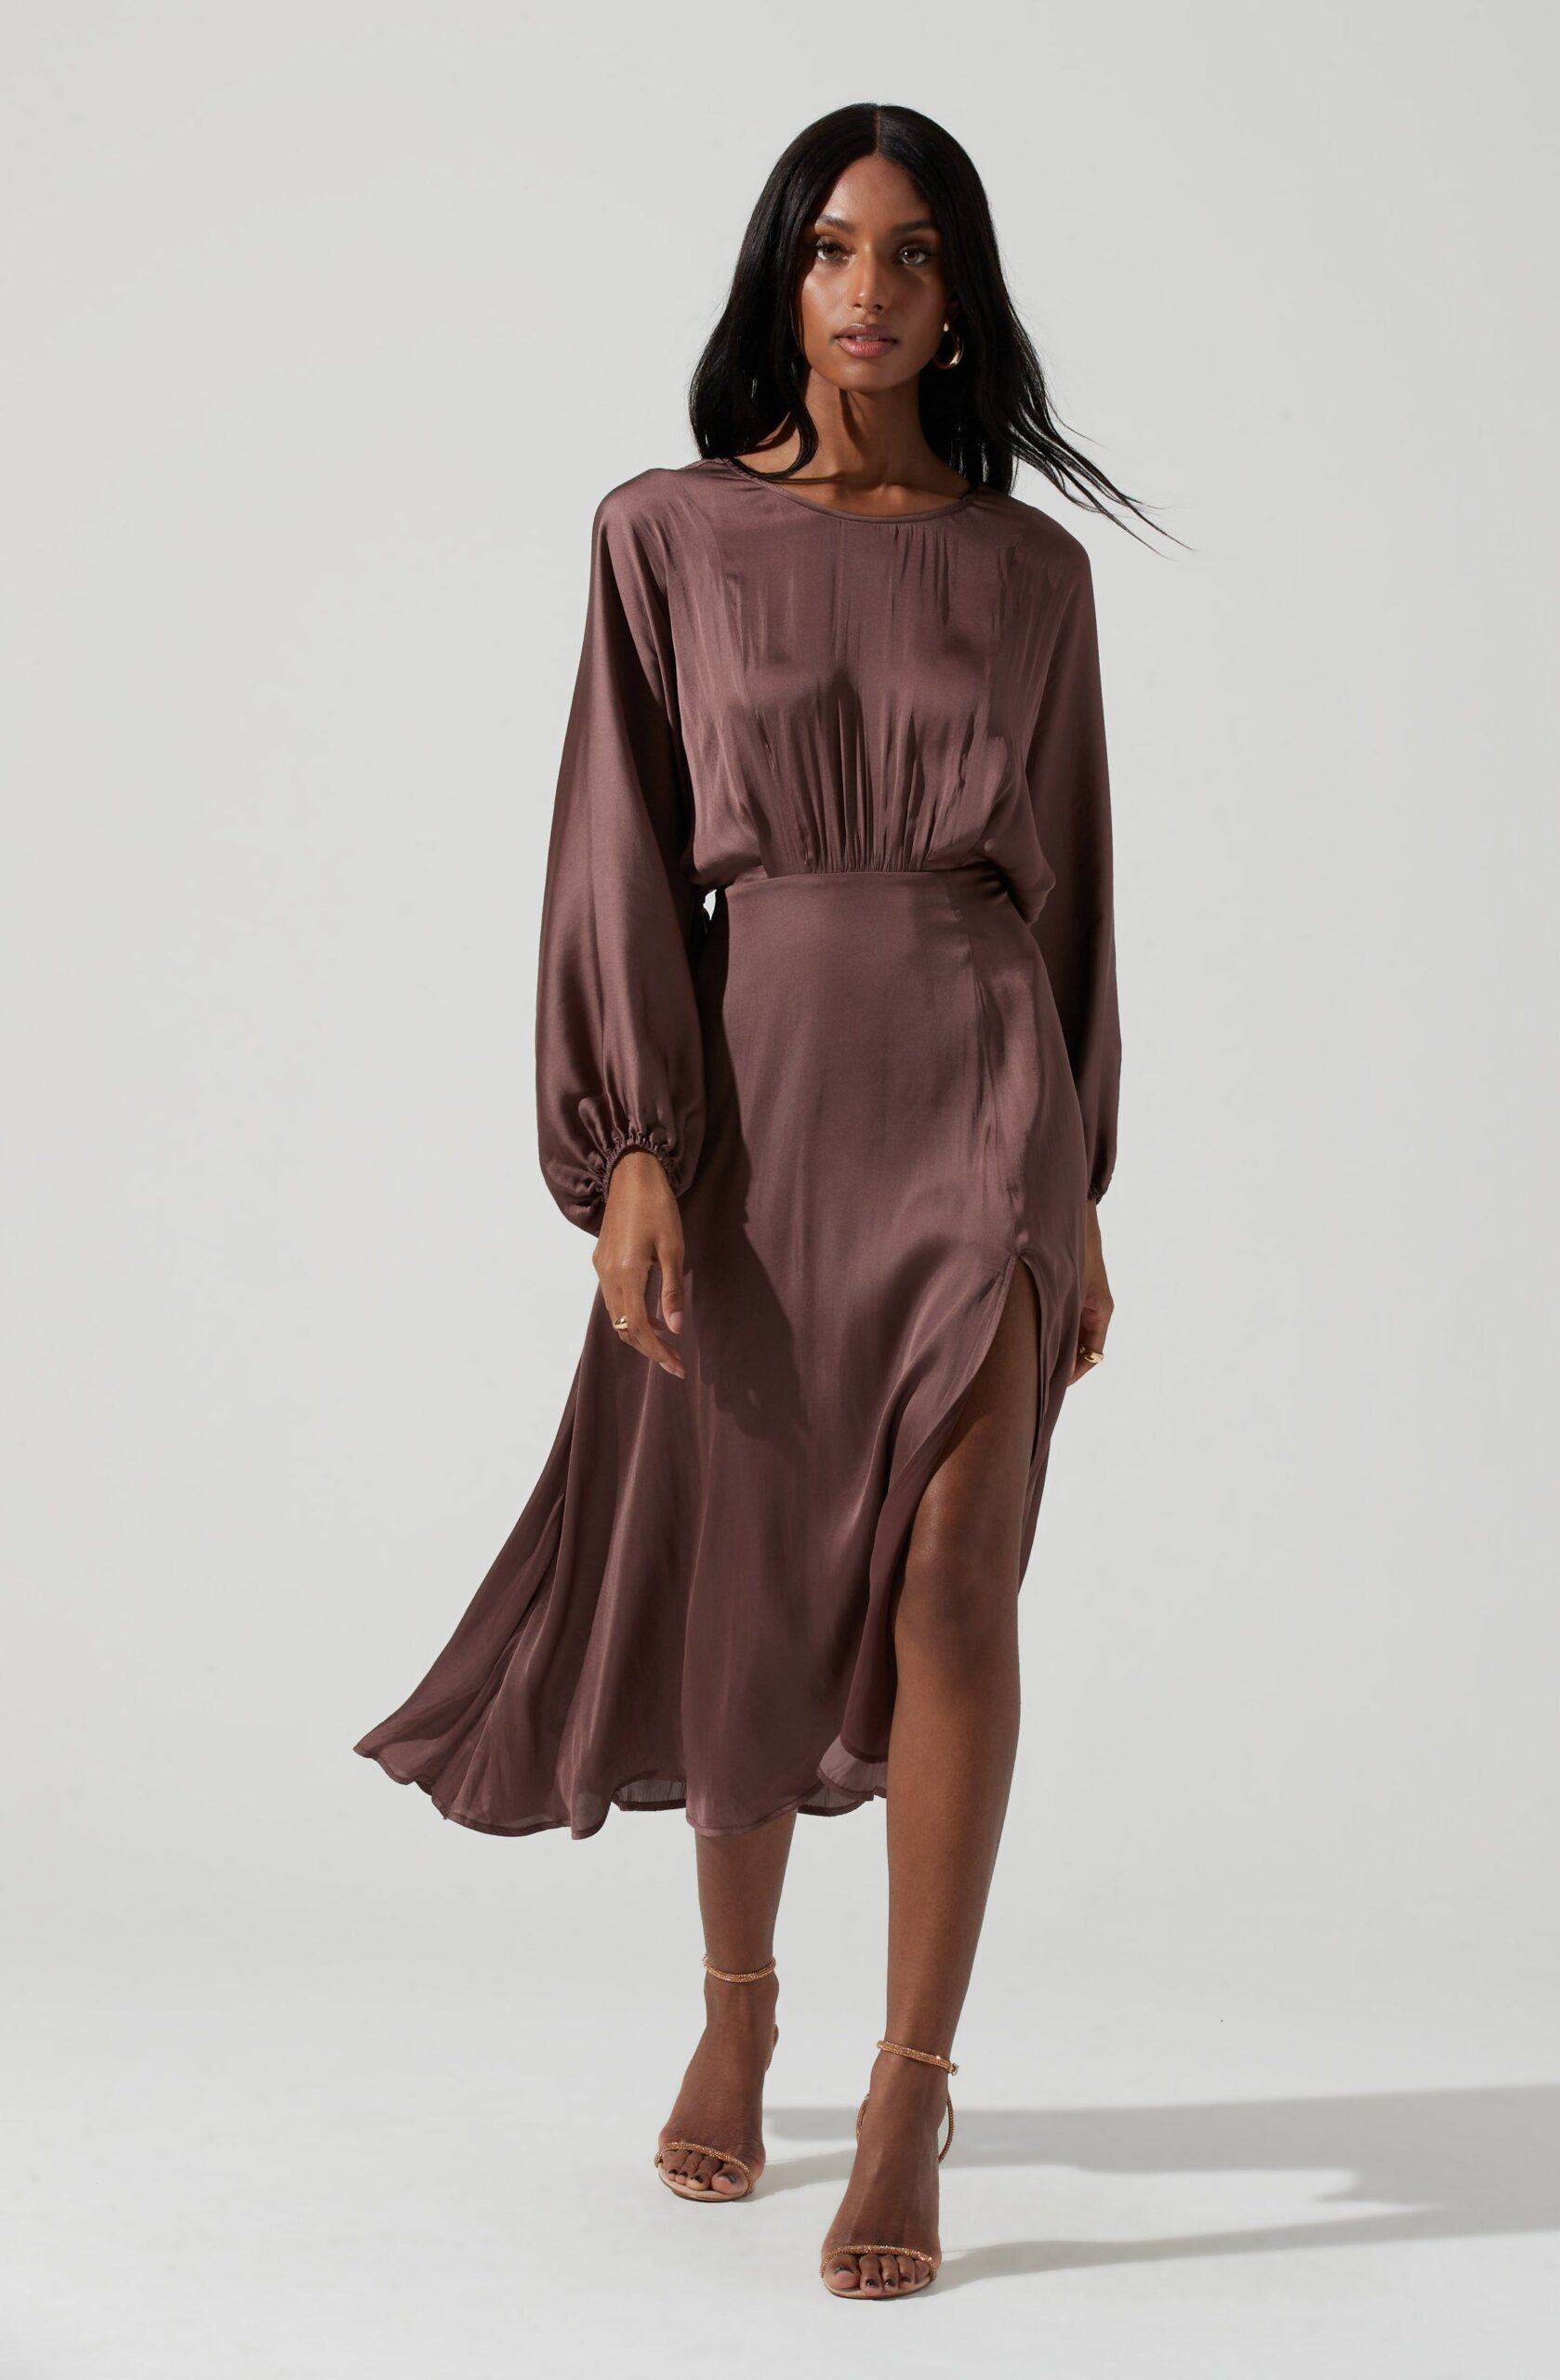 Bronze Dress Outfit Ideas